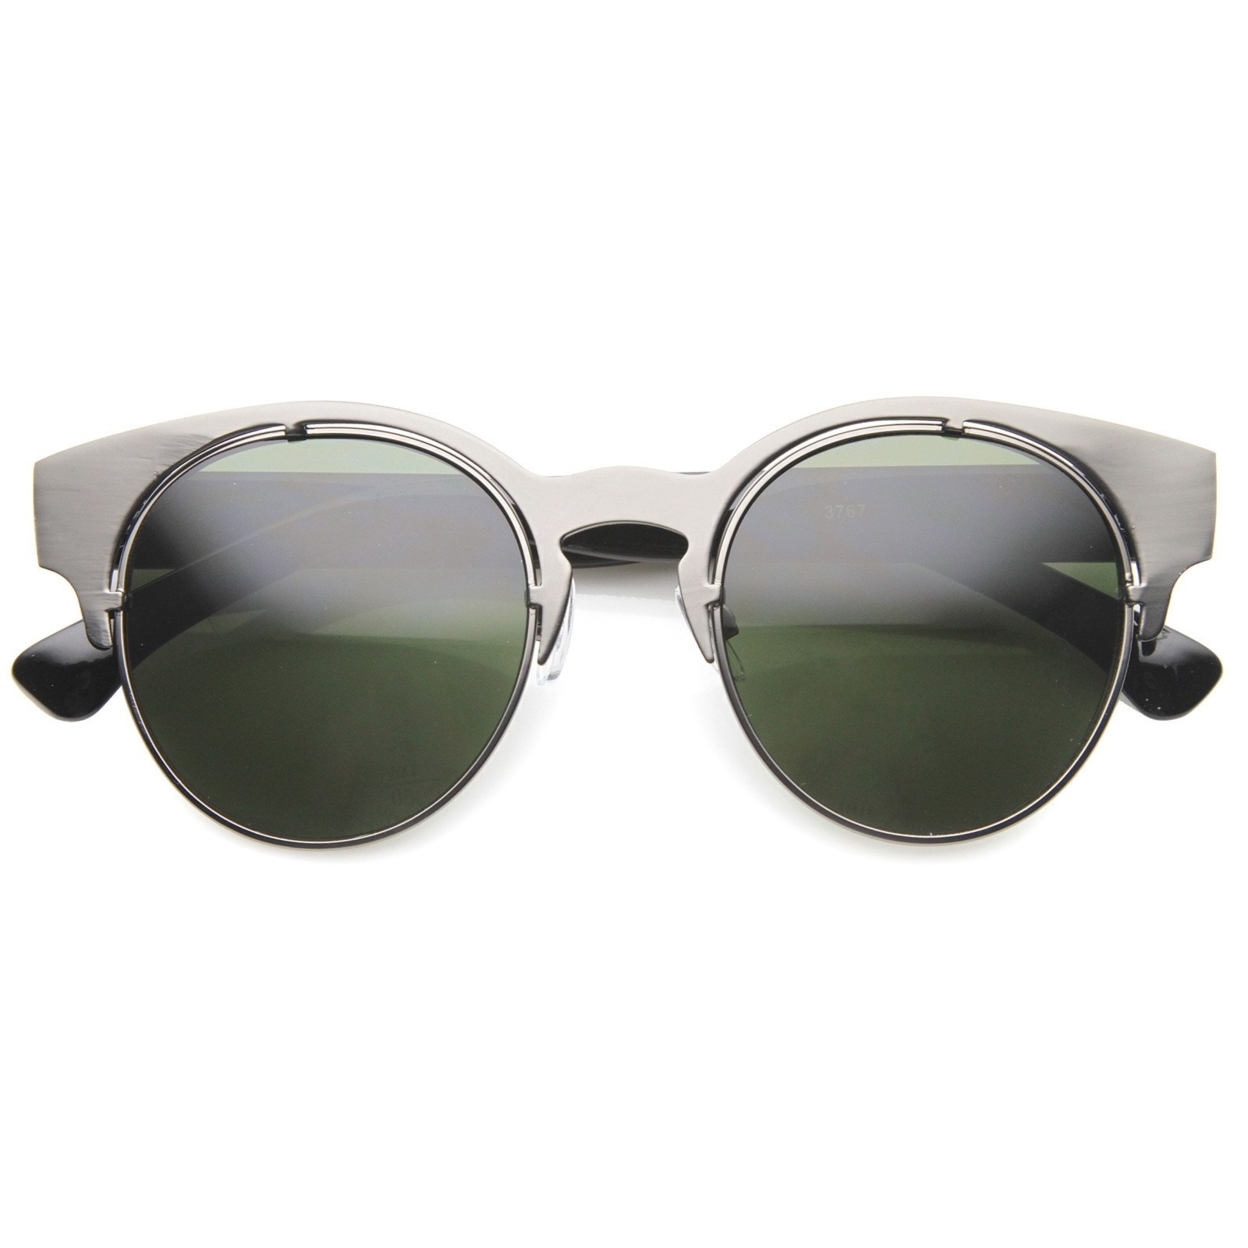 Mens Metal Semi-Rimless Sunglasses With UV400 Protected Composite Lens - Gunmetal-Black / Green